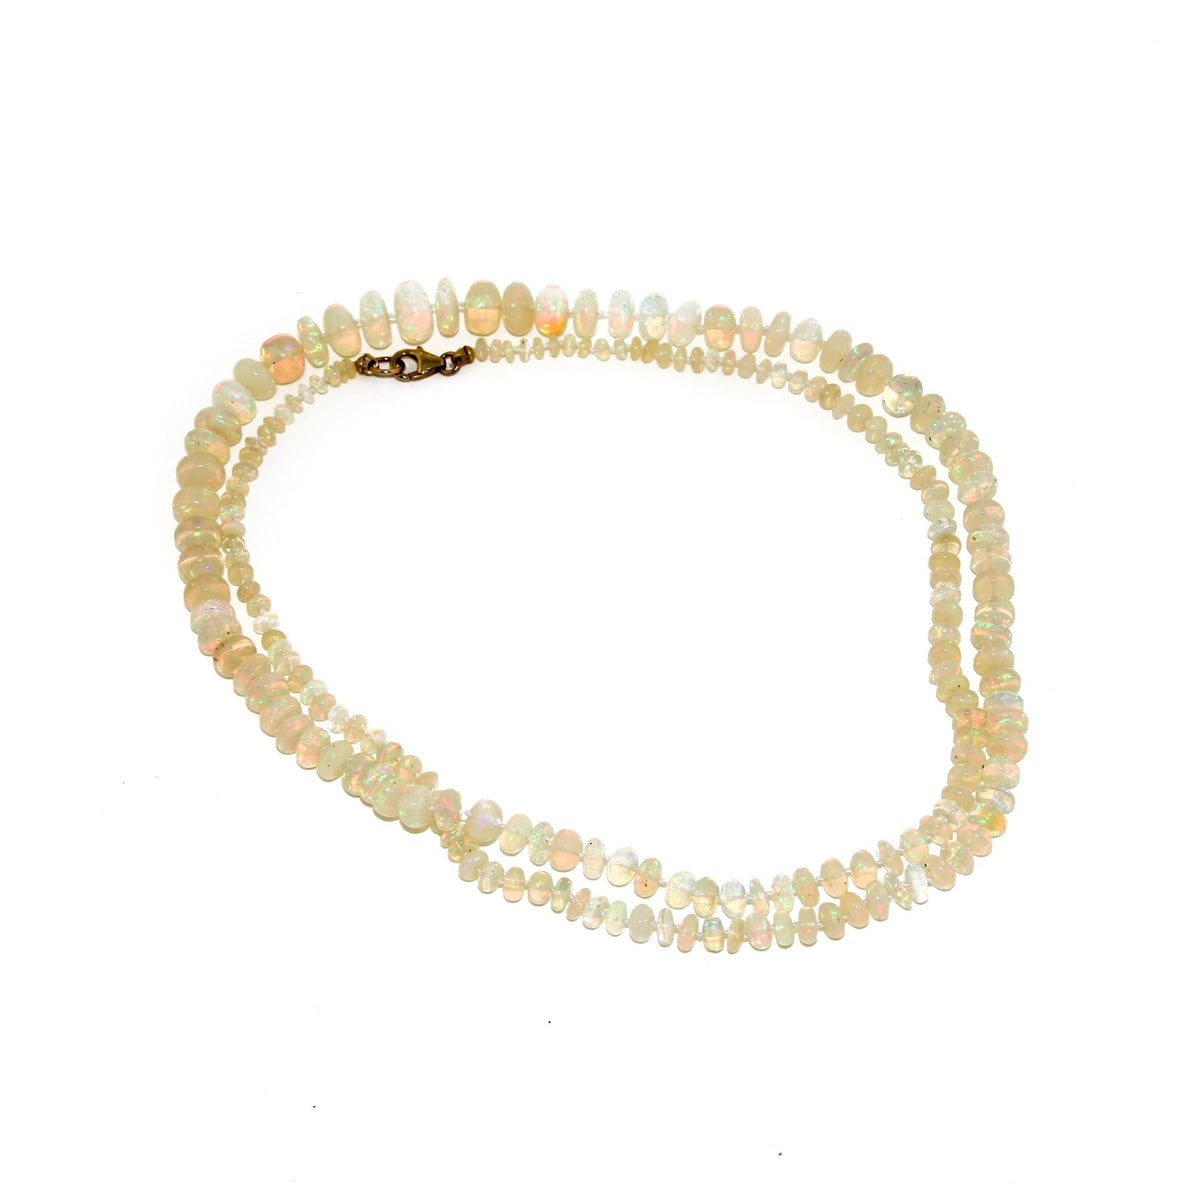 Graduated Ethiopian Opal Beaded Necklace (32 3/4) - Kingdom Jewelry